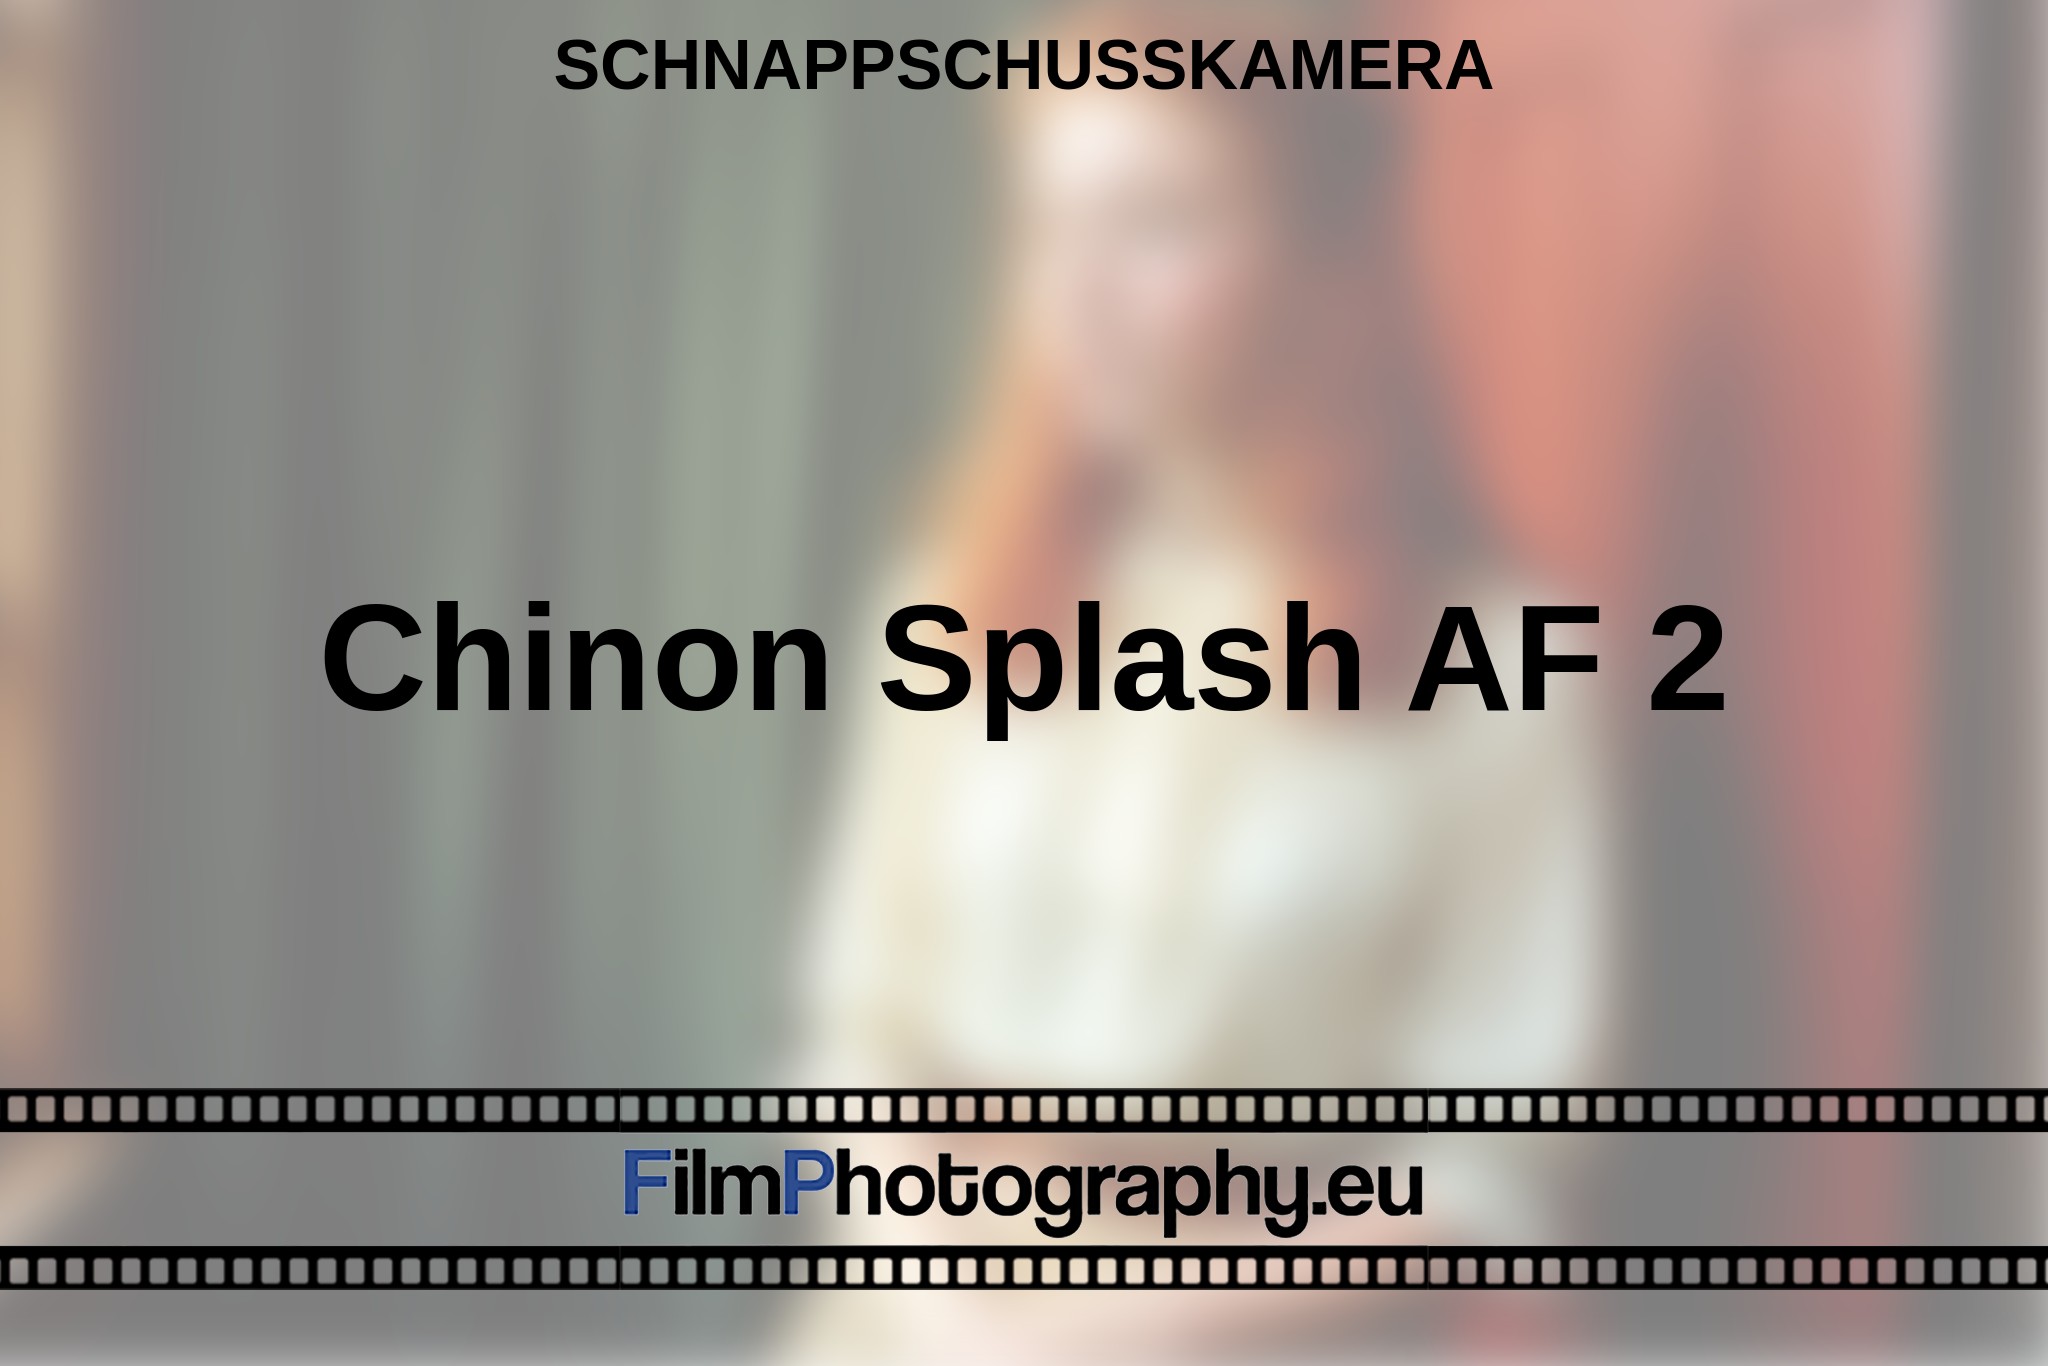 chinon-splash-af-2-schnappschusskamera-bnv.jpg